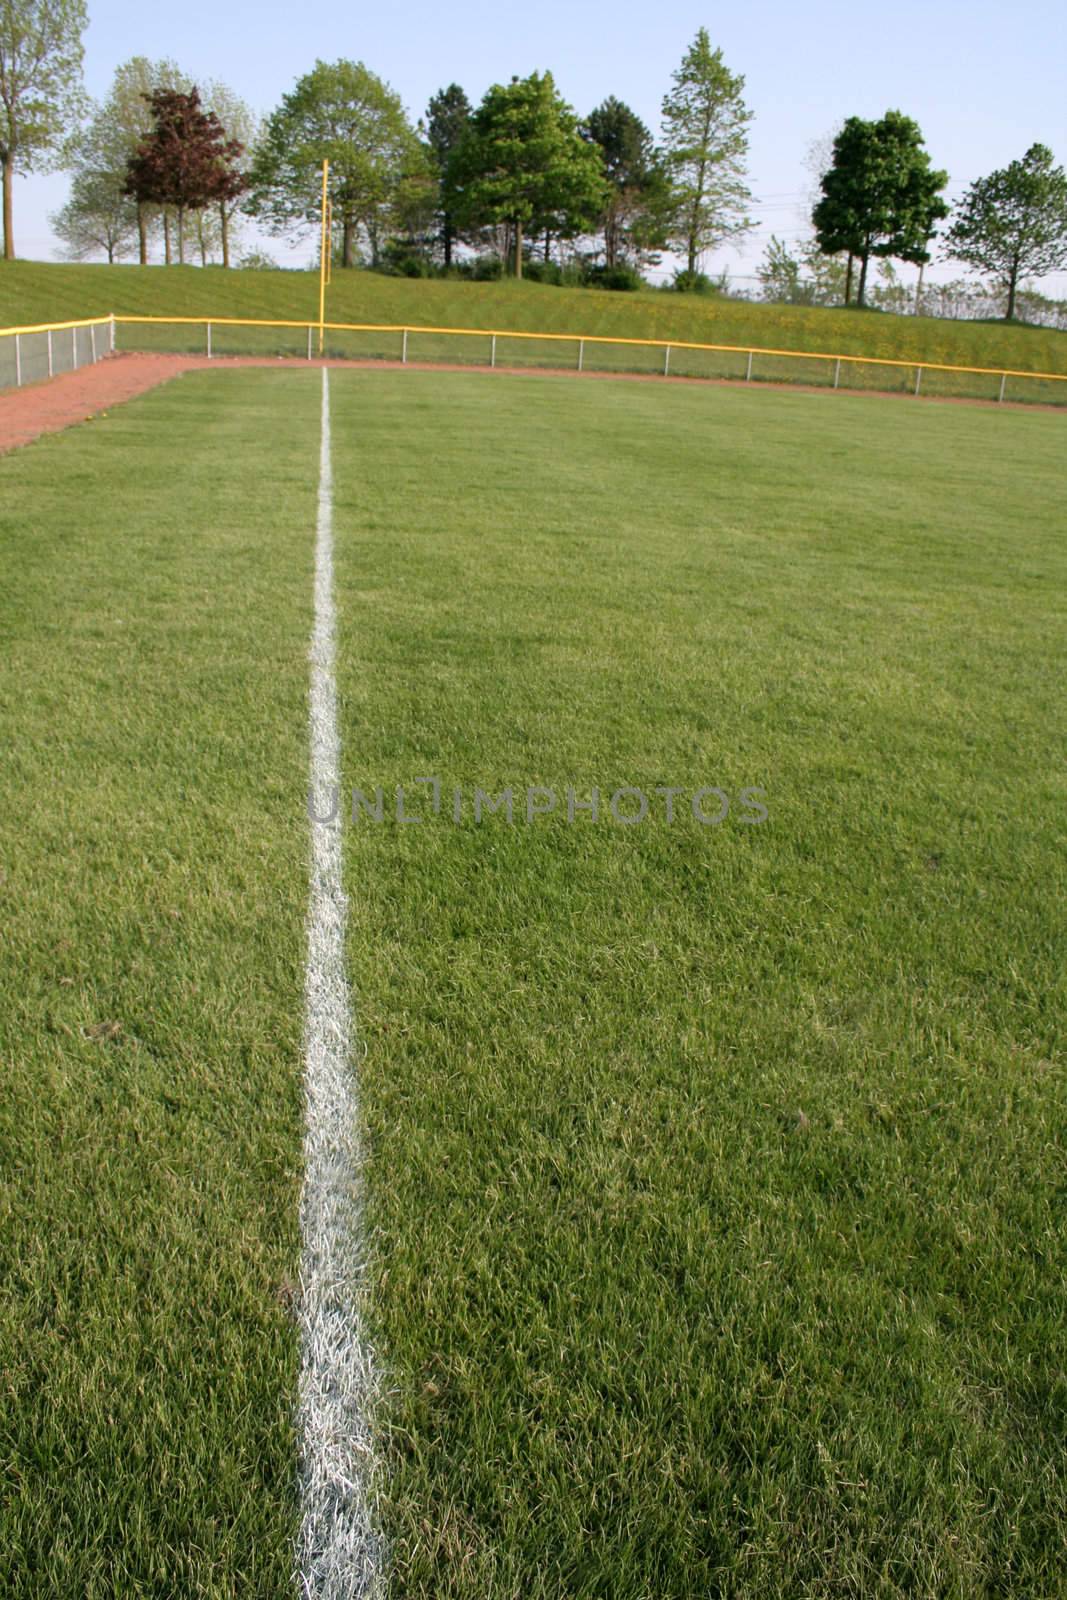 A shot of left field on a baseball diamond.